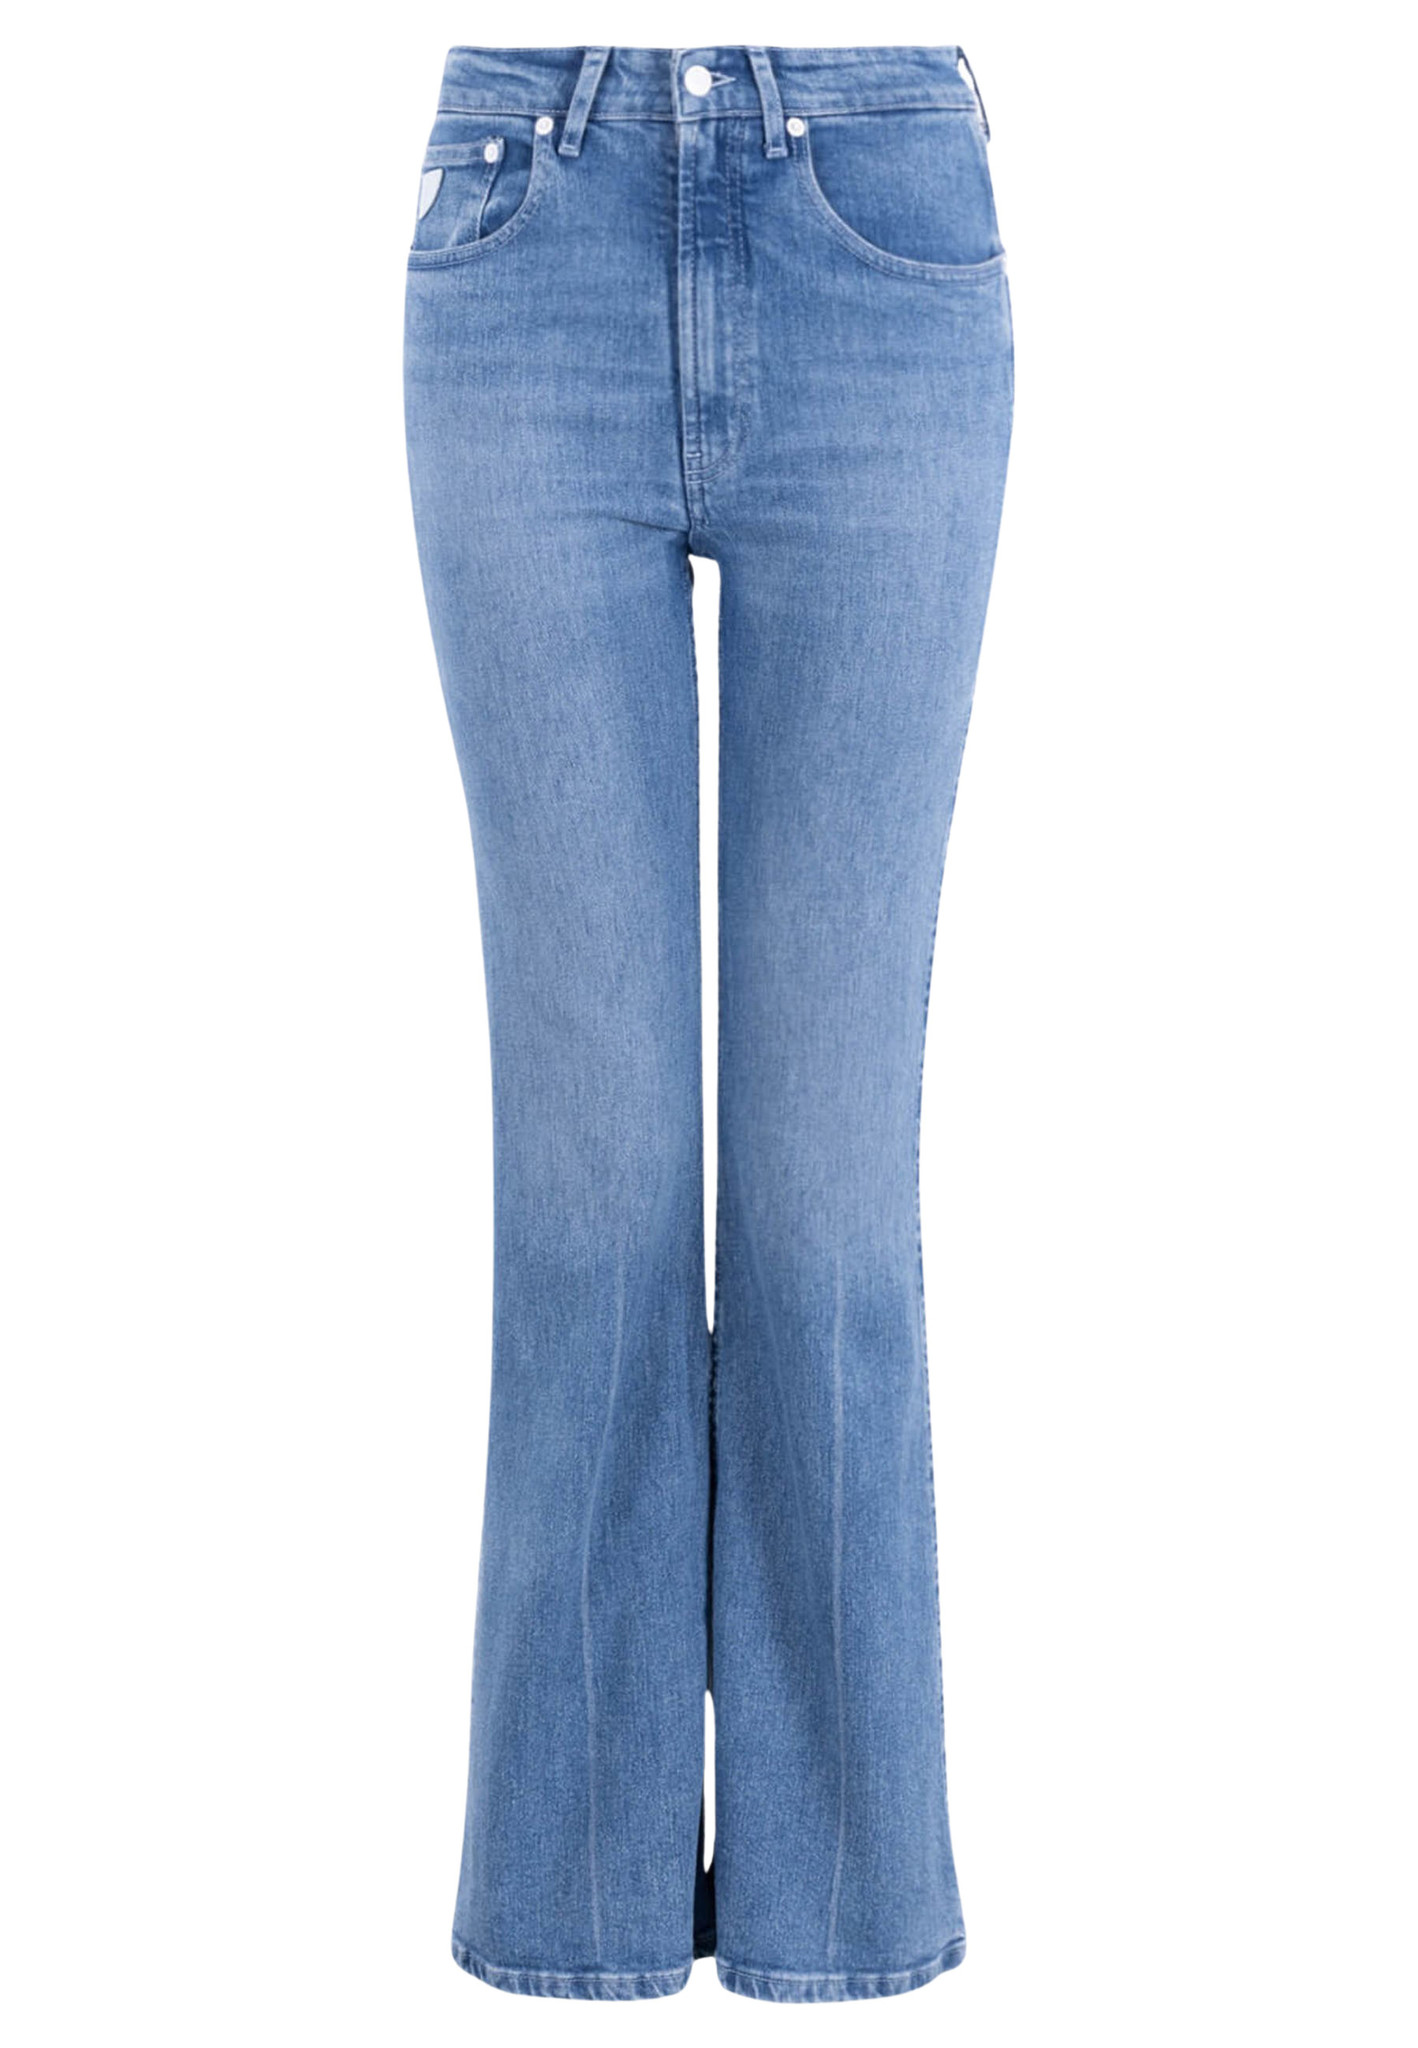 Lois jeans lichtblauw Dames maat 32/32